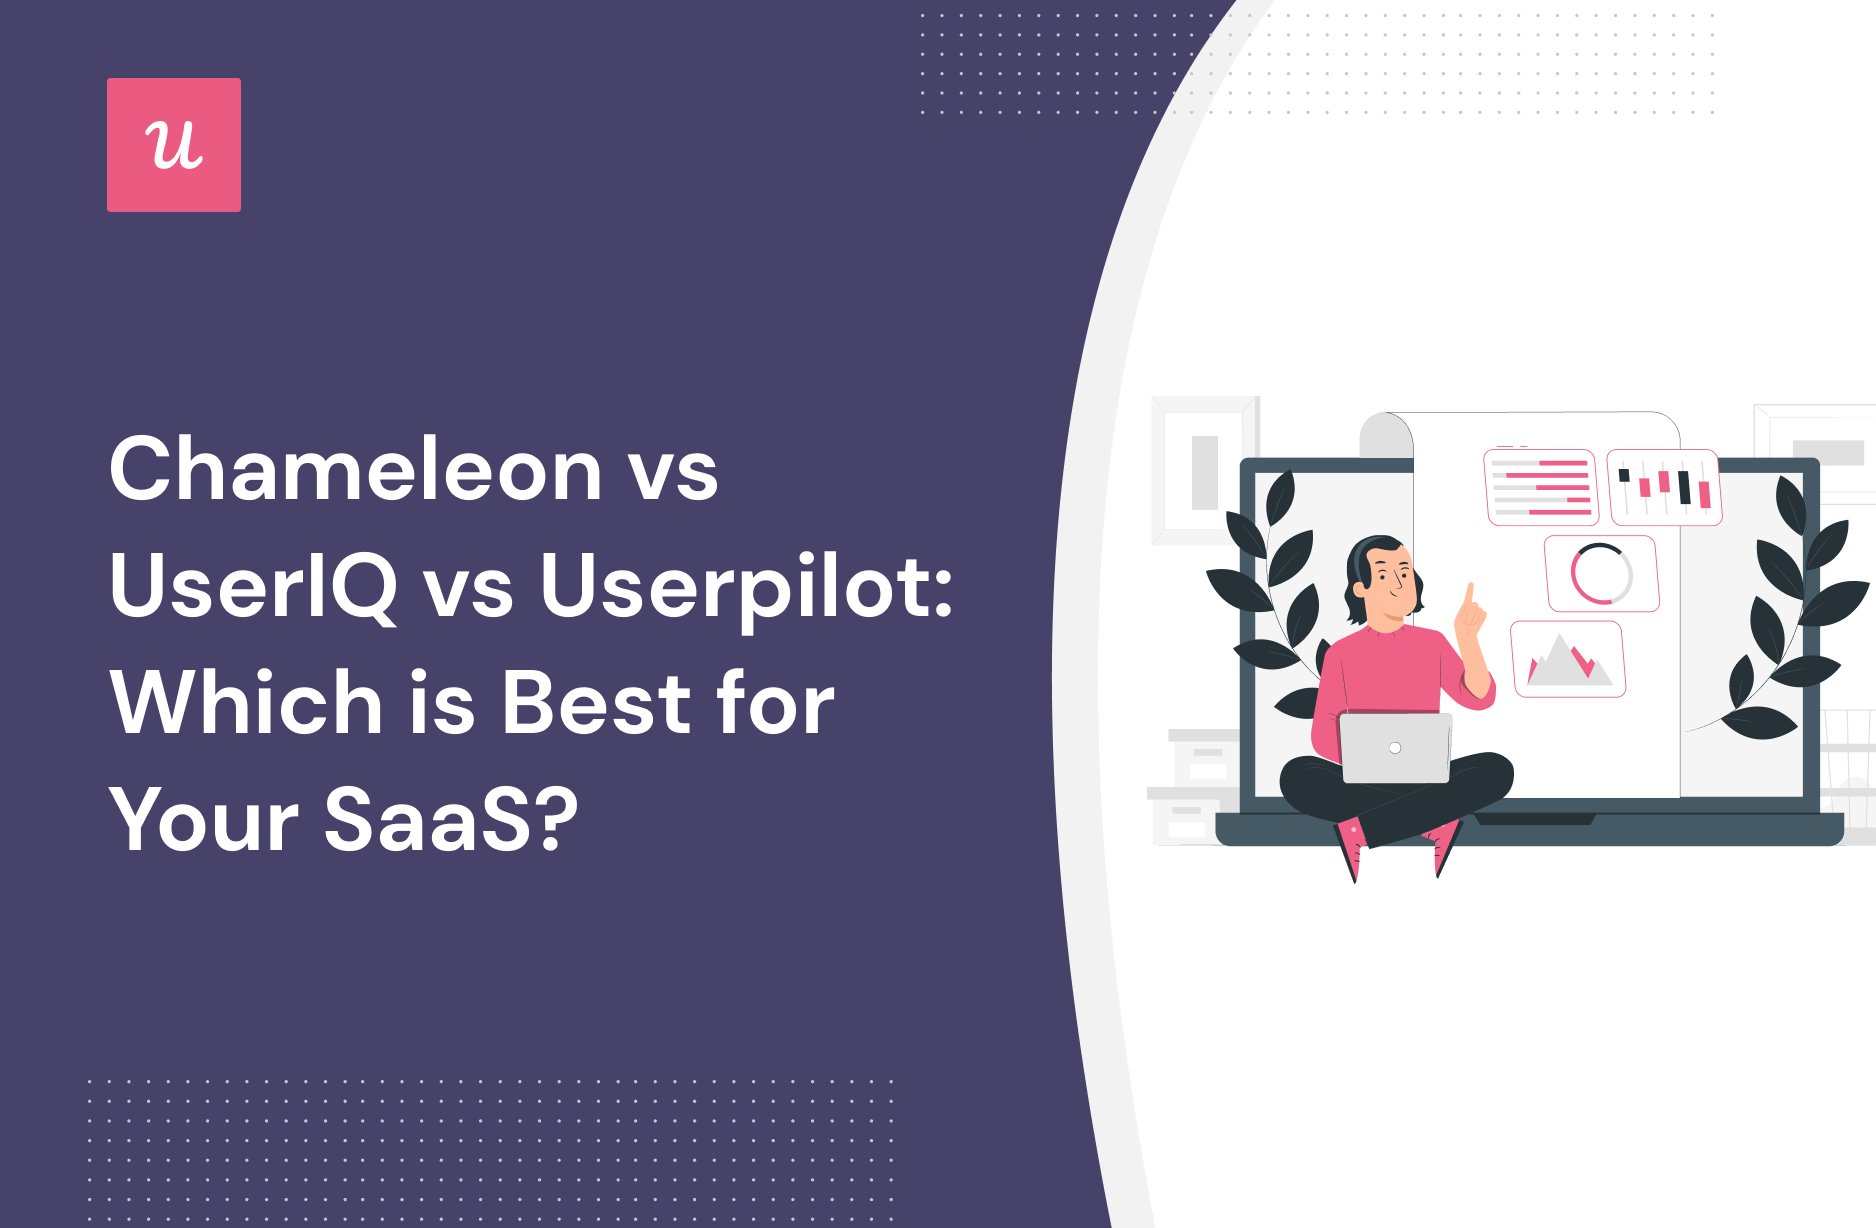 Chameleon vs UserIQ vs Userpilot: Which is Best for Your SaaS?